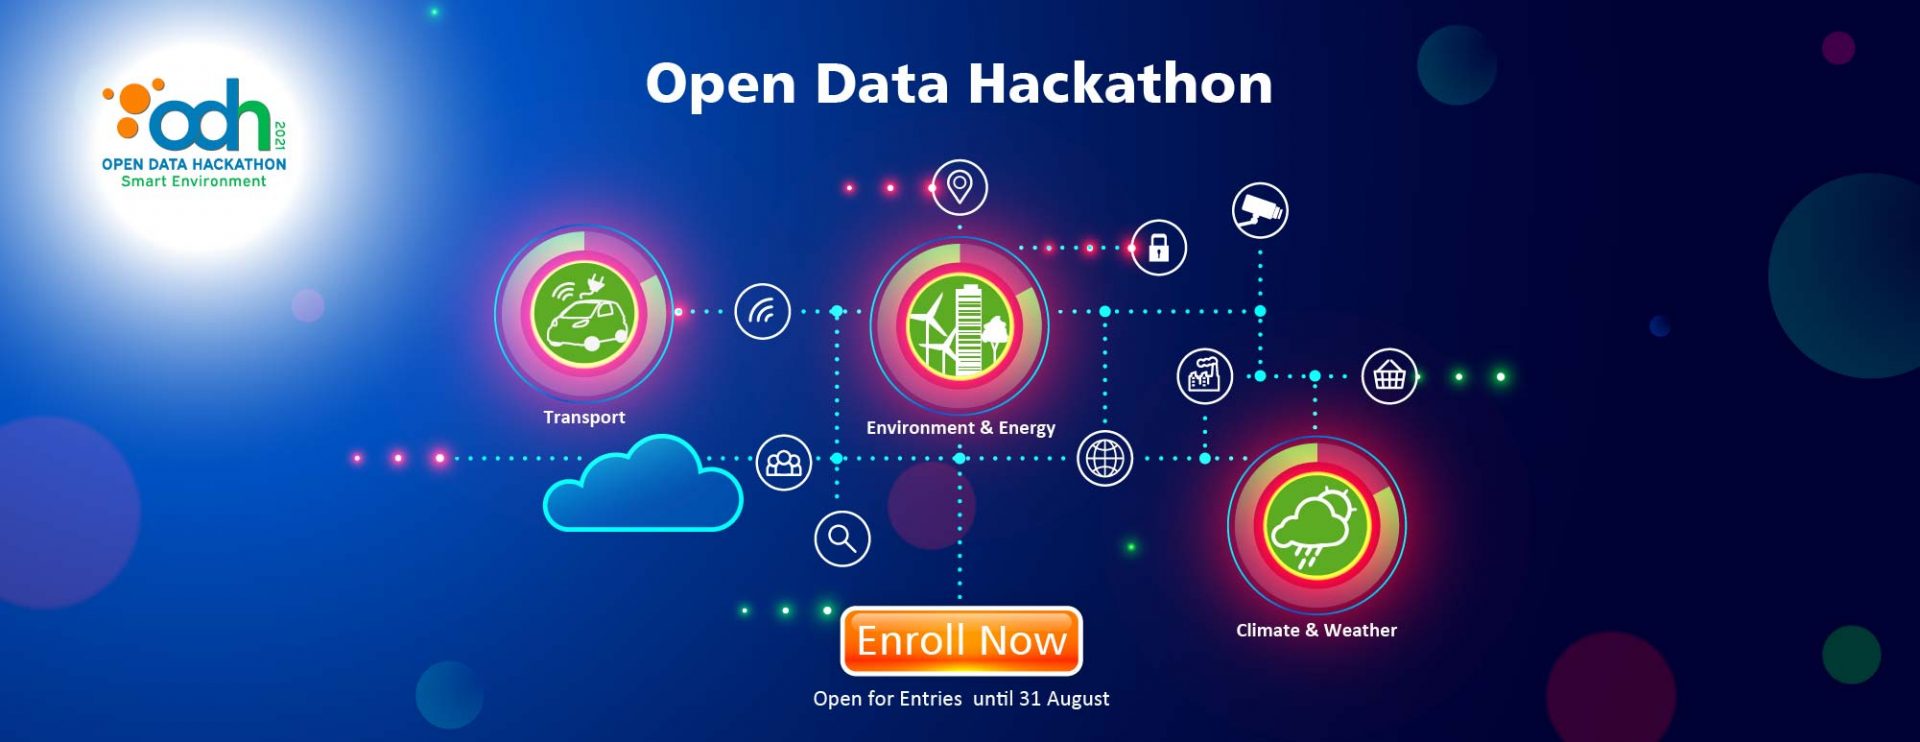 Open Data Hackathon 2021 - Smart Environment - StartupmeHK